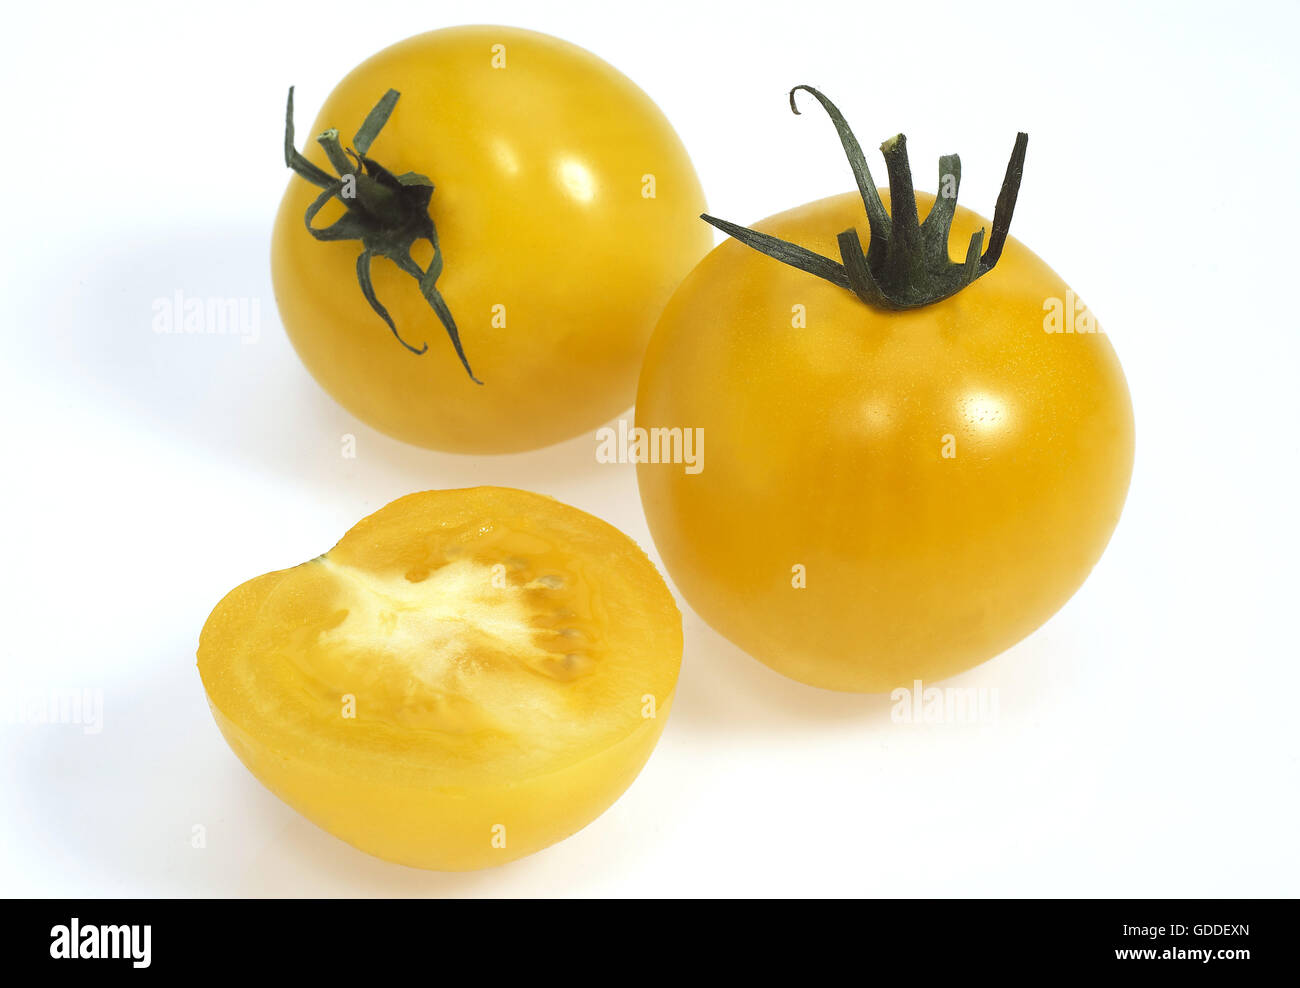 Yellow Tomatoes, solanum lycopersicum, Vegetable against White Background Stock Photo